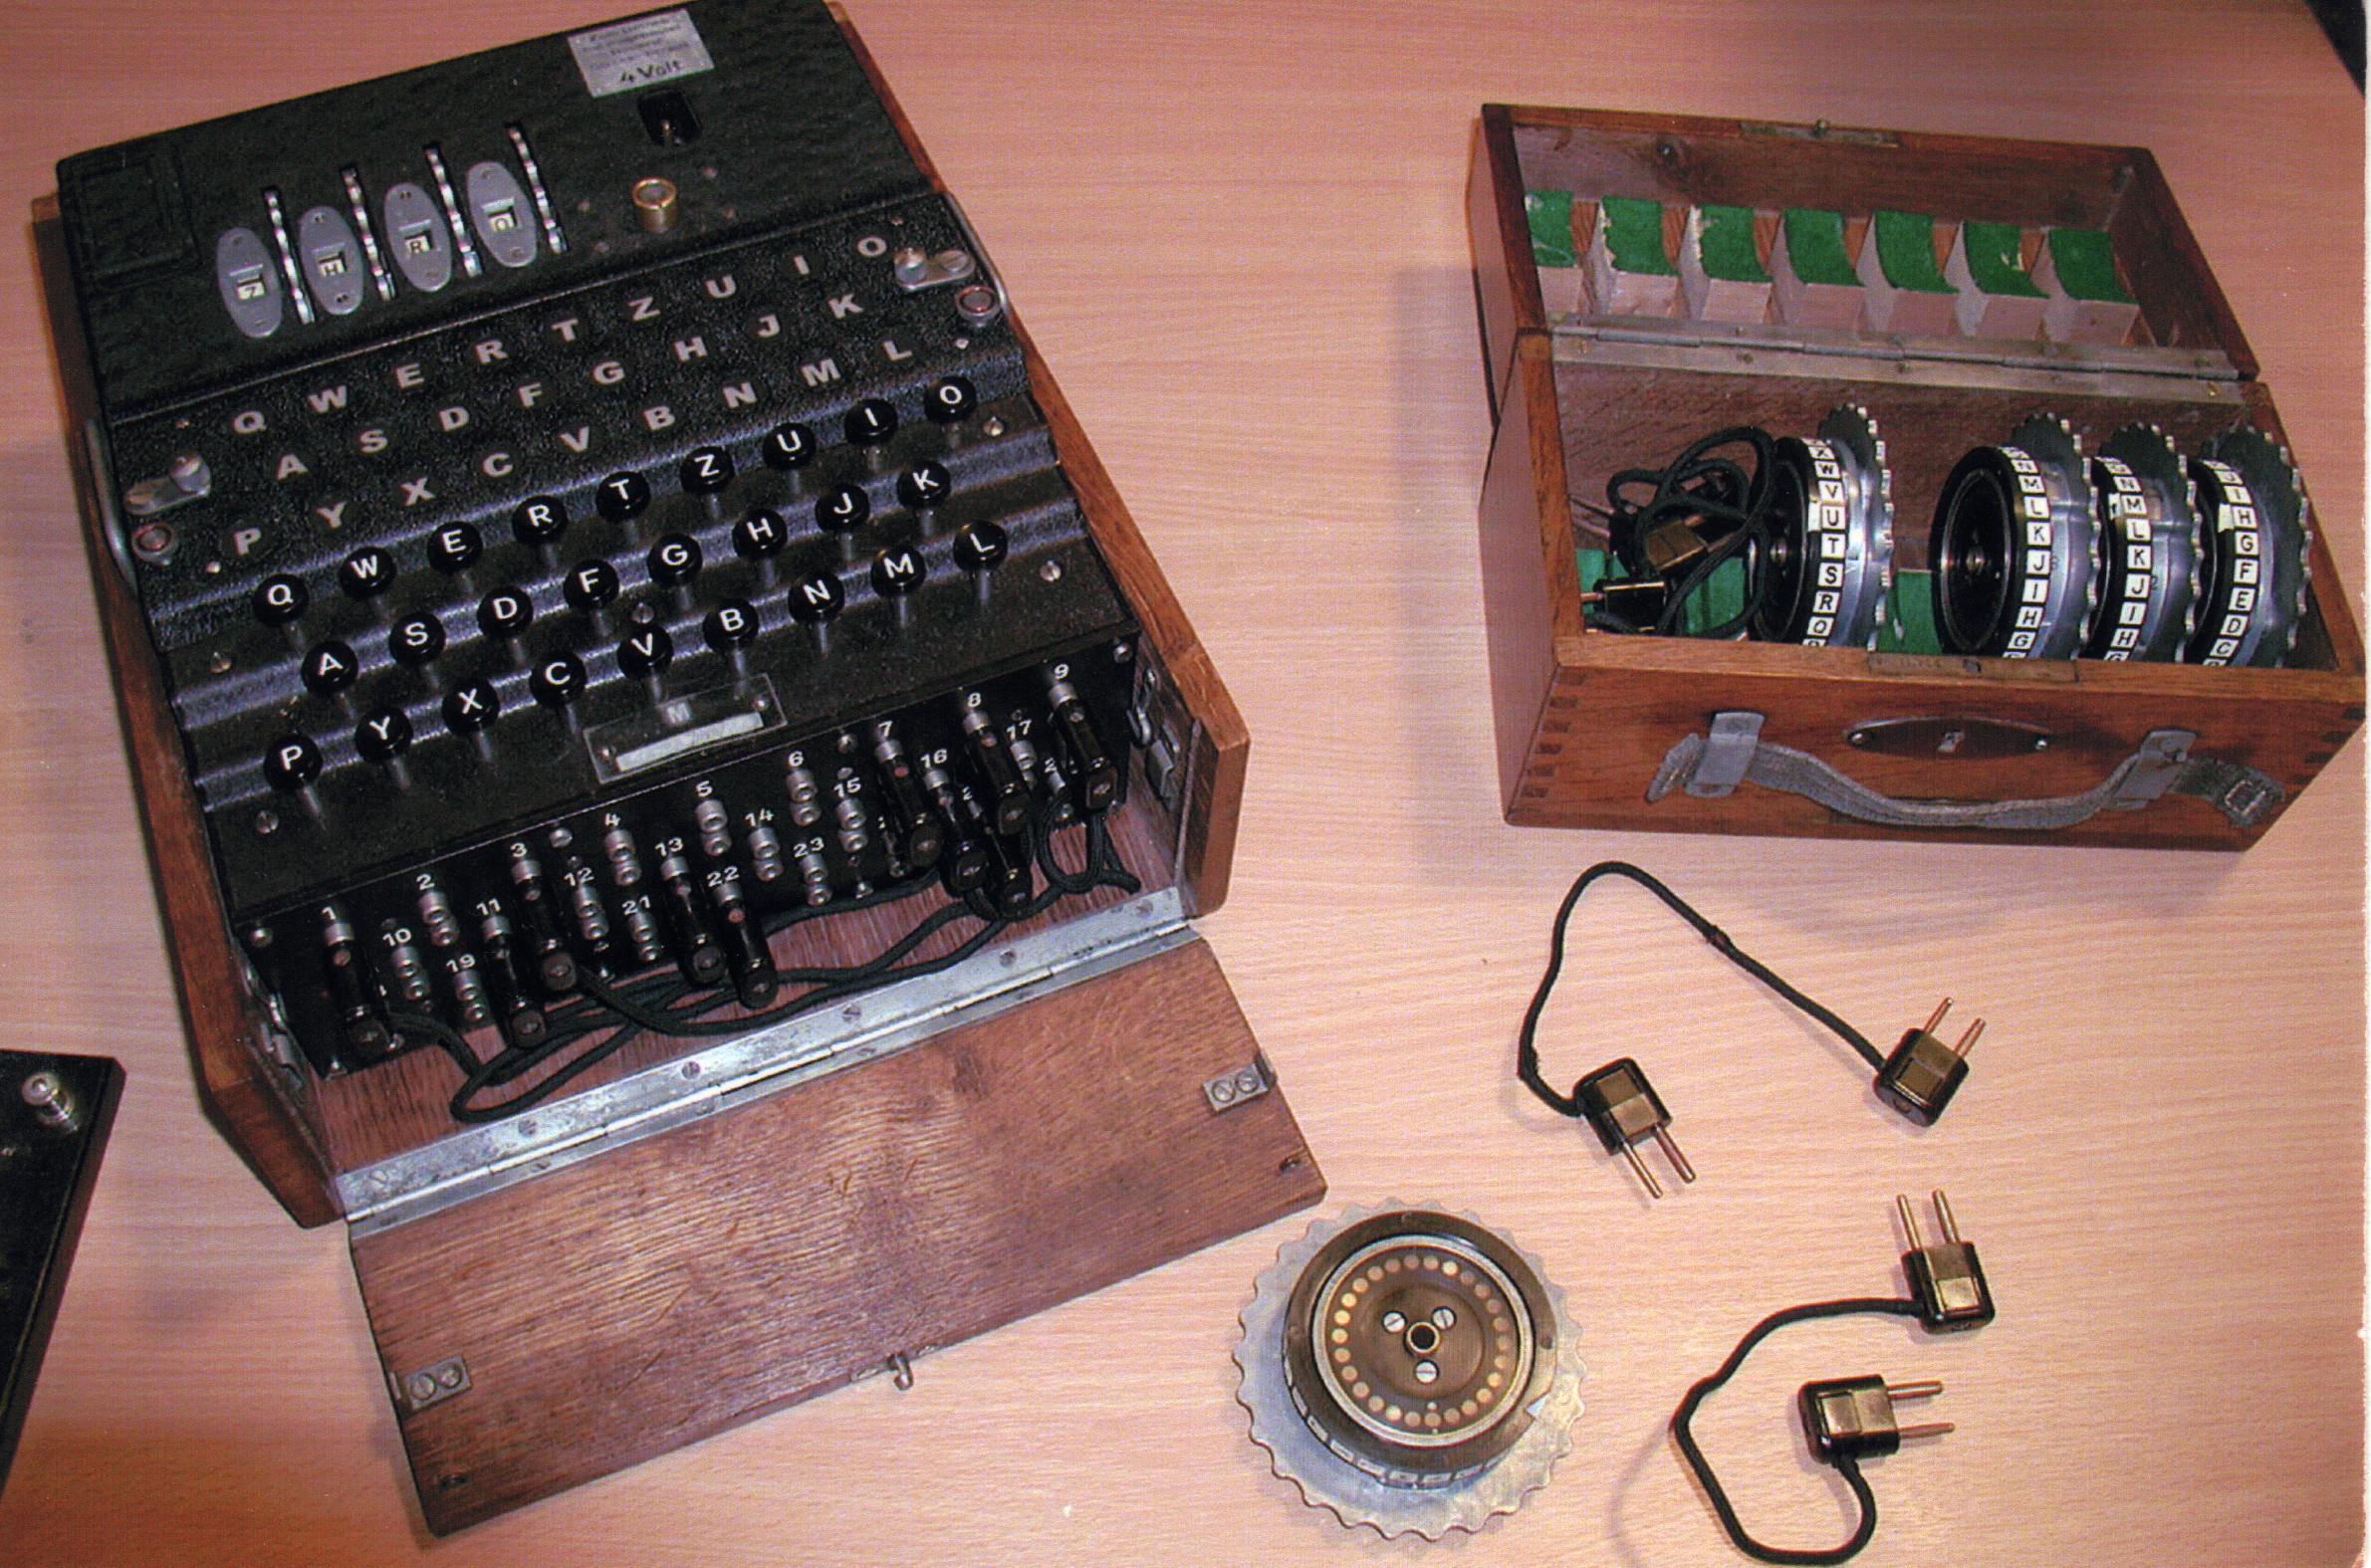 Enigma machine.jpg